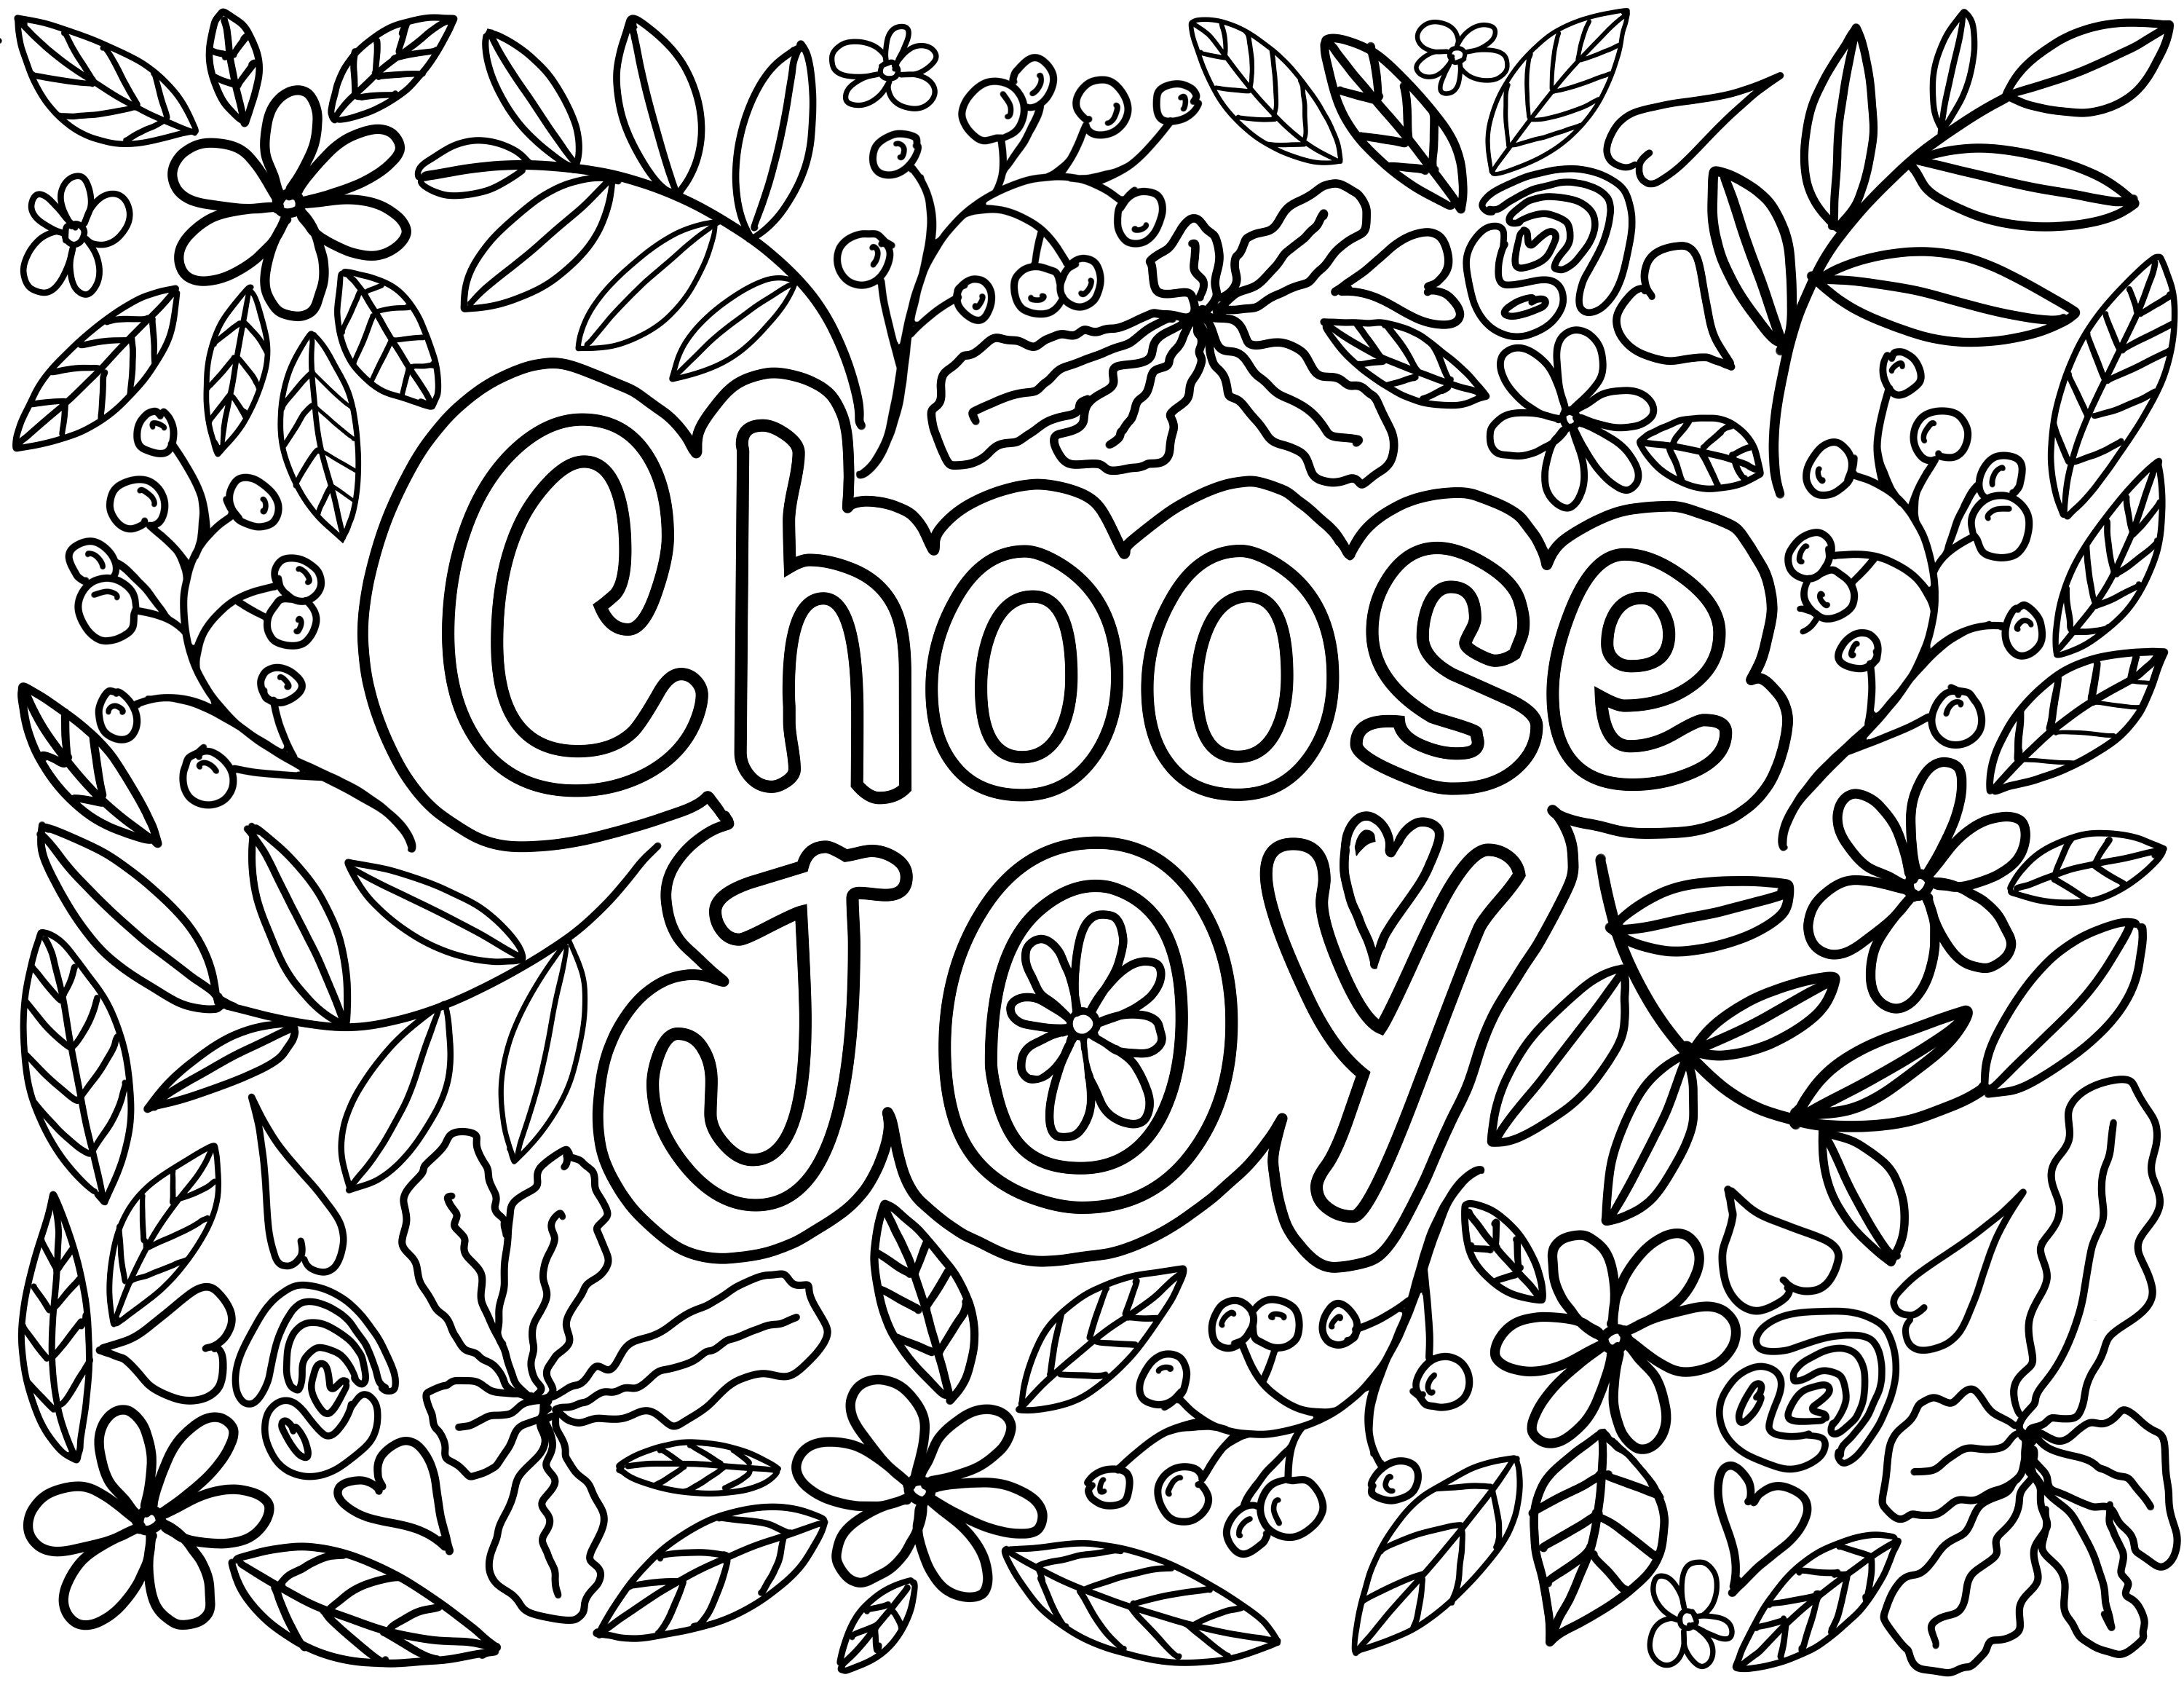 Choose joy printable coloring page digital plants and flowers coloring page adult coloring book